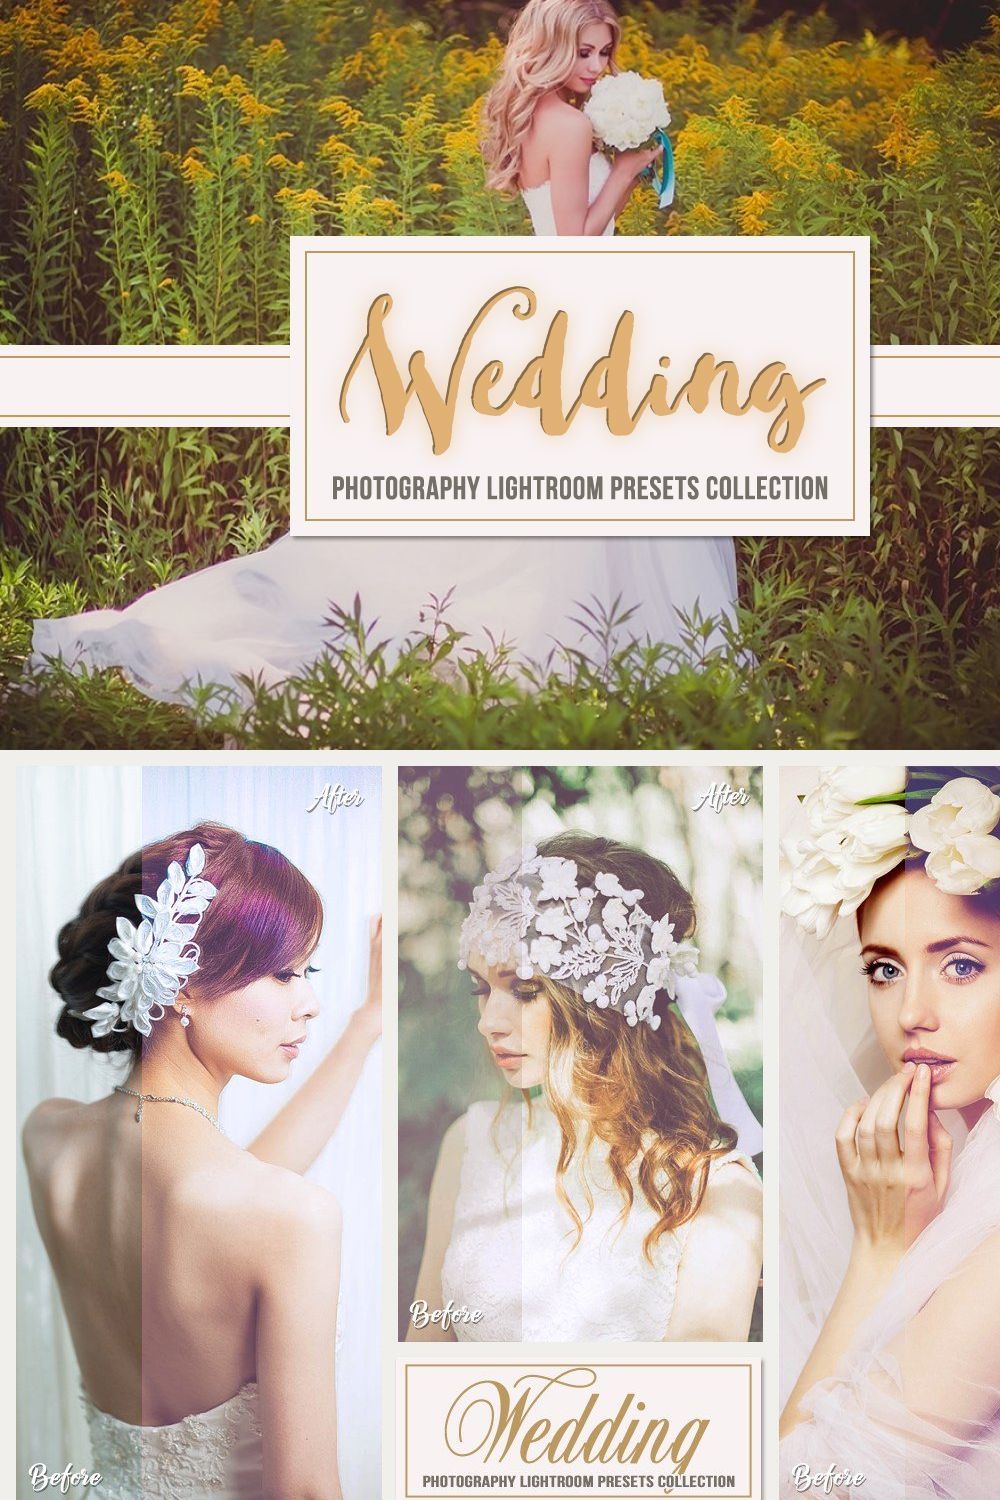 Wedding Lightroom Presets Collection pinterest preview image.